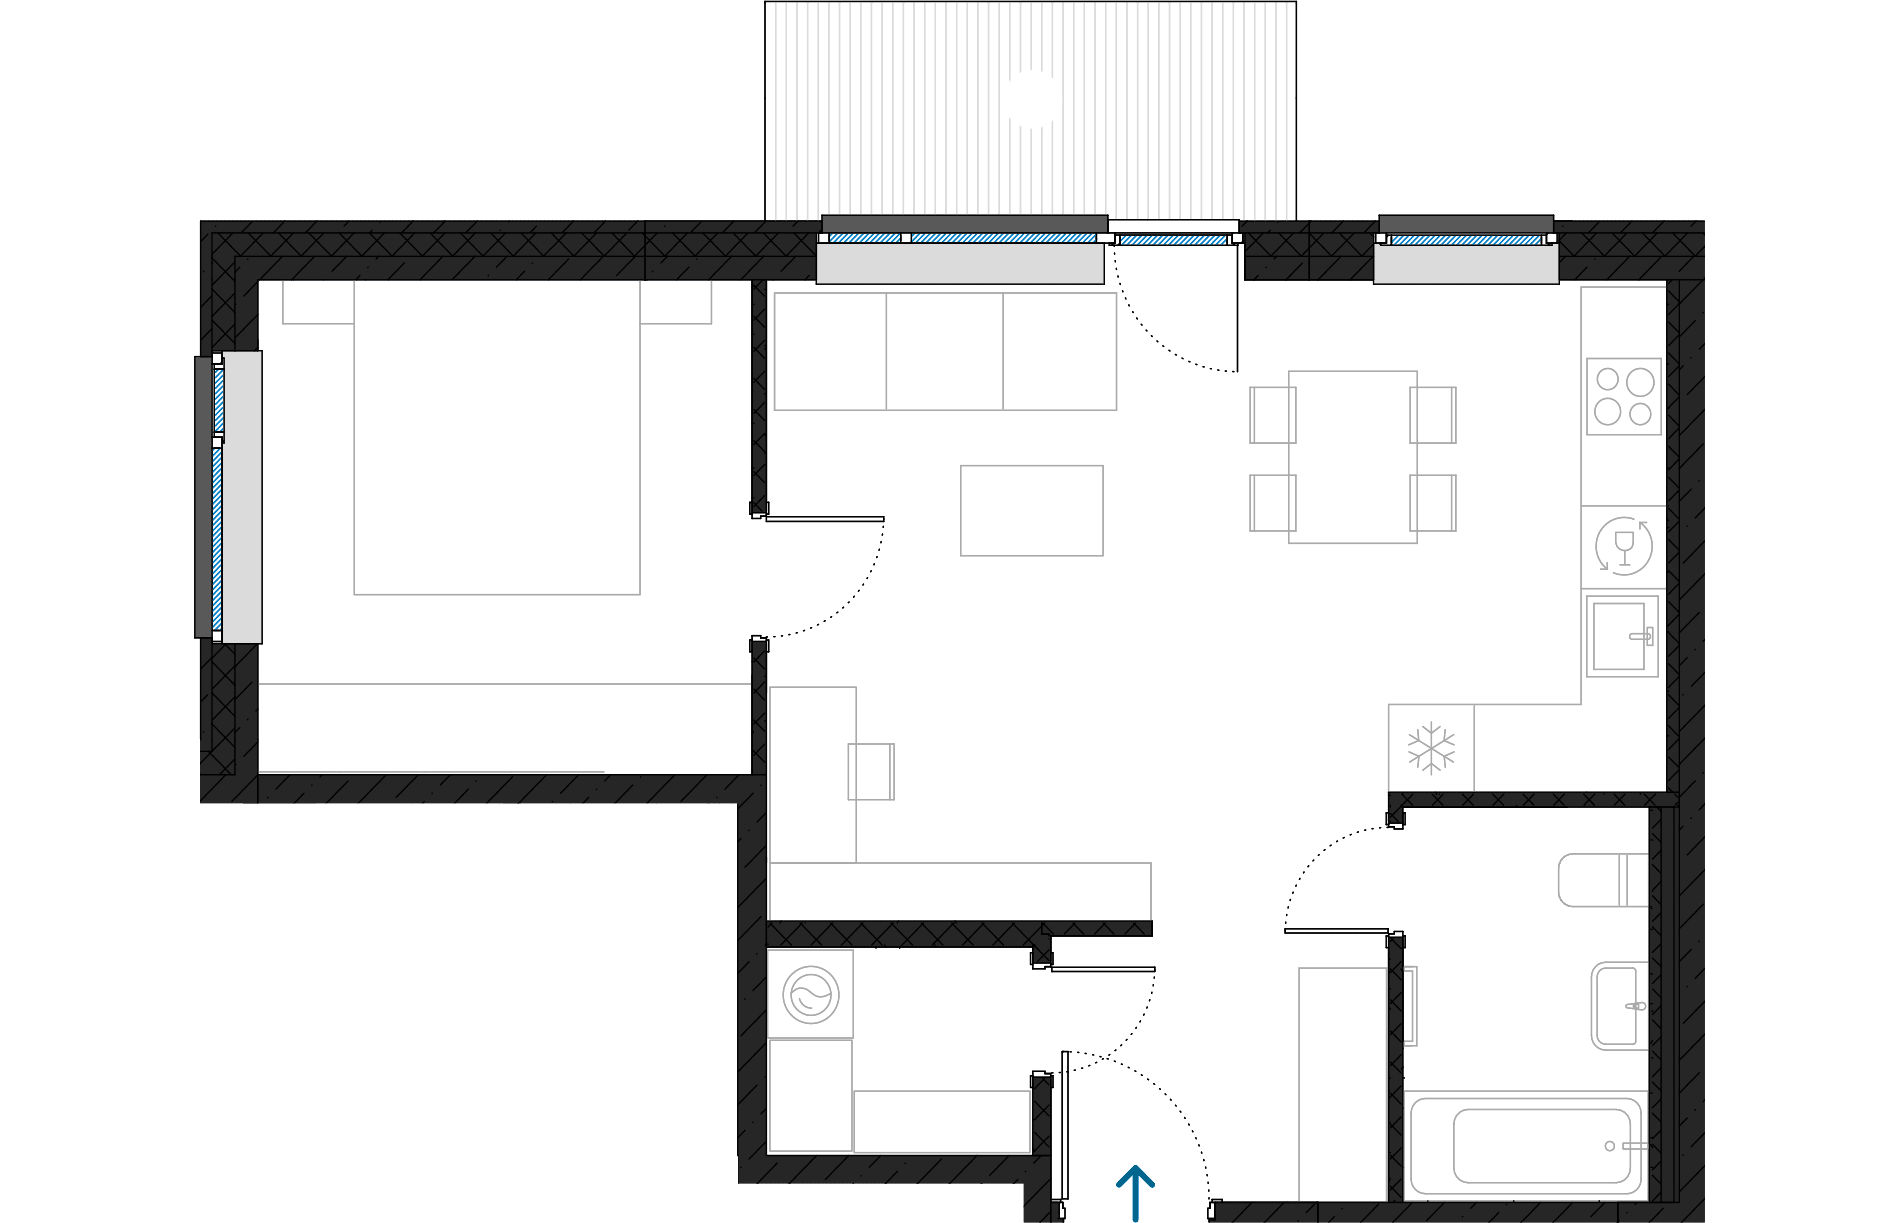 2C-1a floorplan